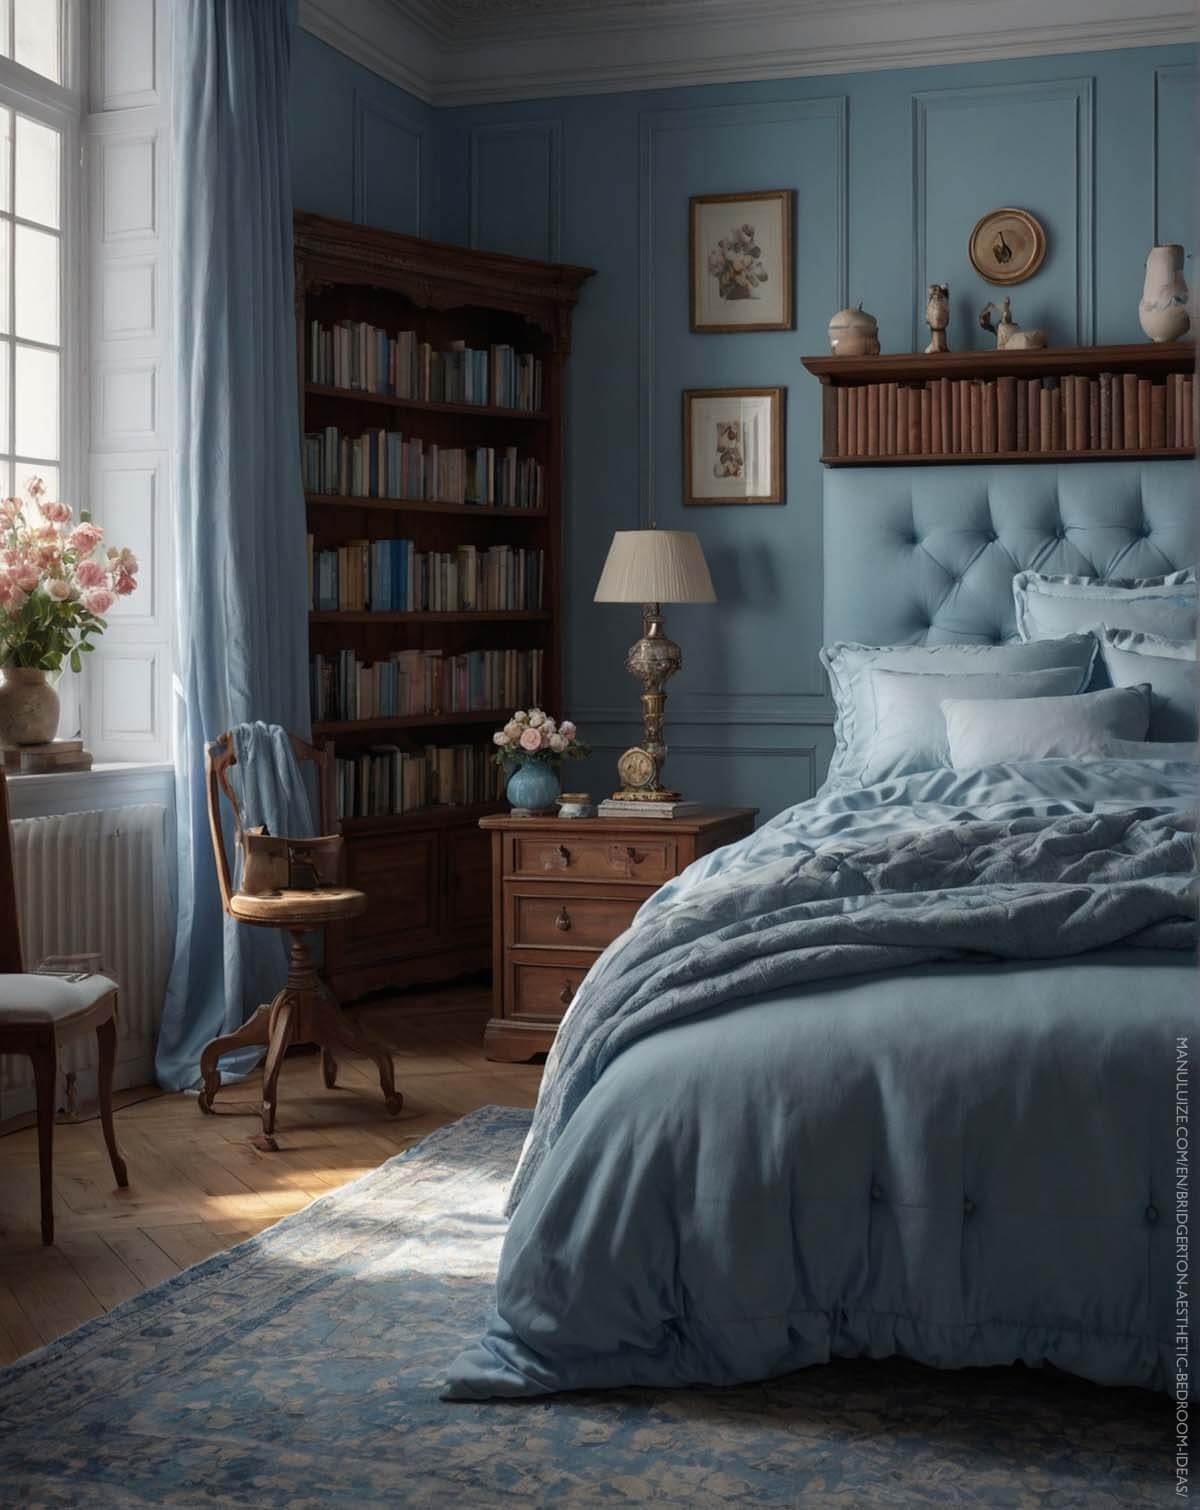 Bookcases for Regency core aesthetic bedroom